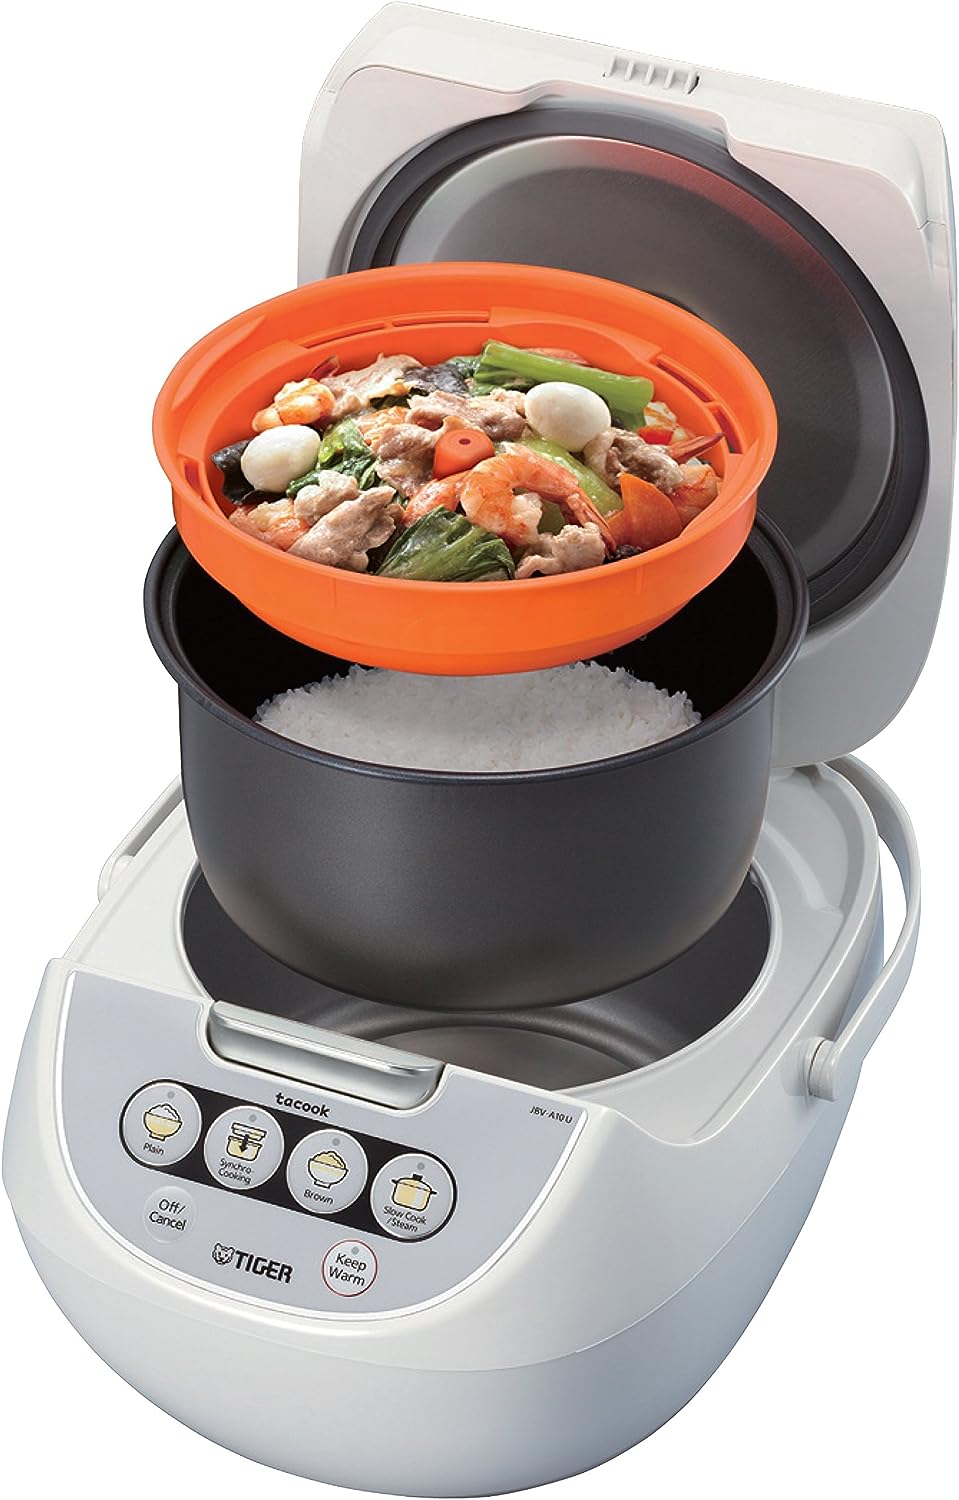 Tayama Rice Cooker/Food Steamer Stainless Steel Inner Pot Keep